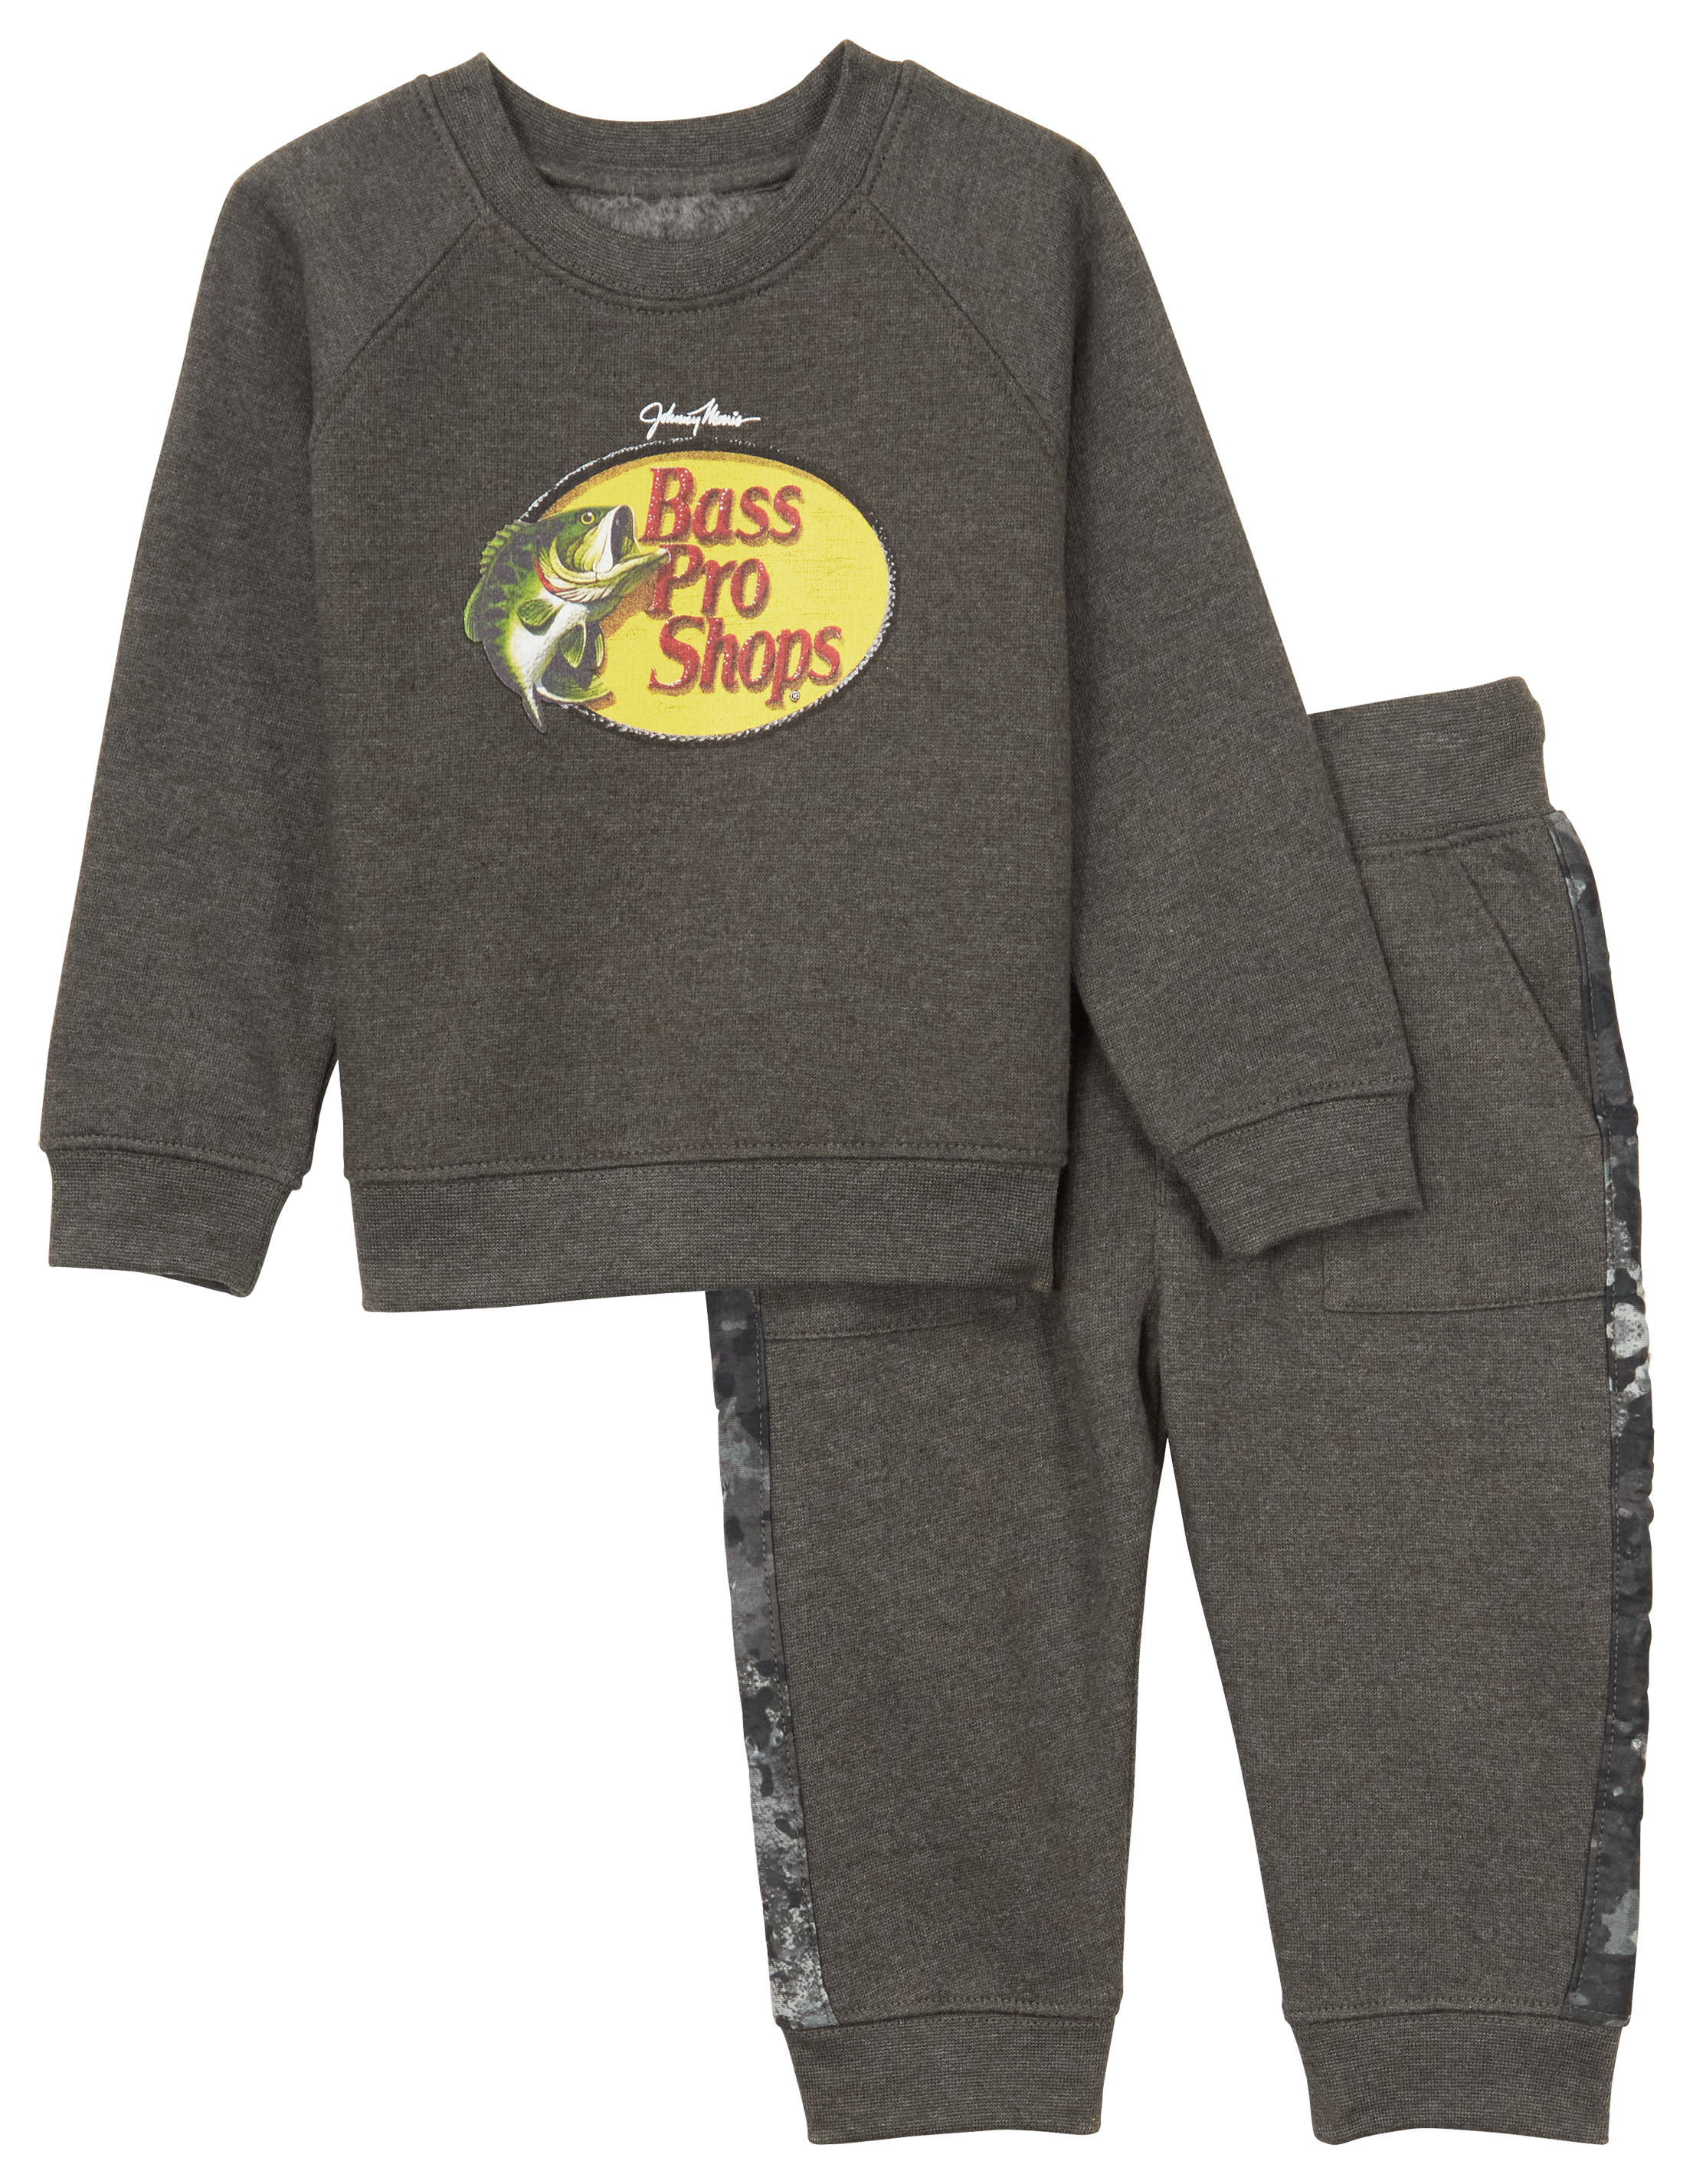 Bass Pro Shops Logo Long-Sleeve Sweatshirt and Pants Set for Babies